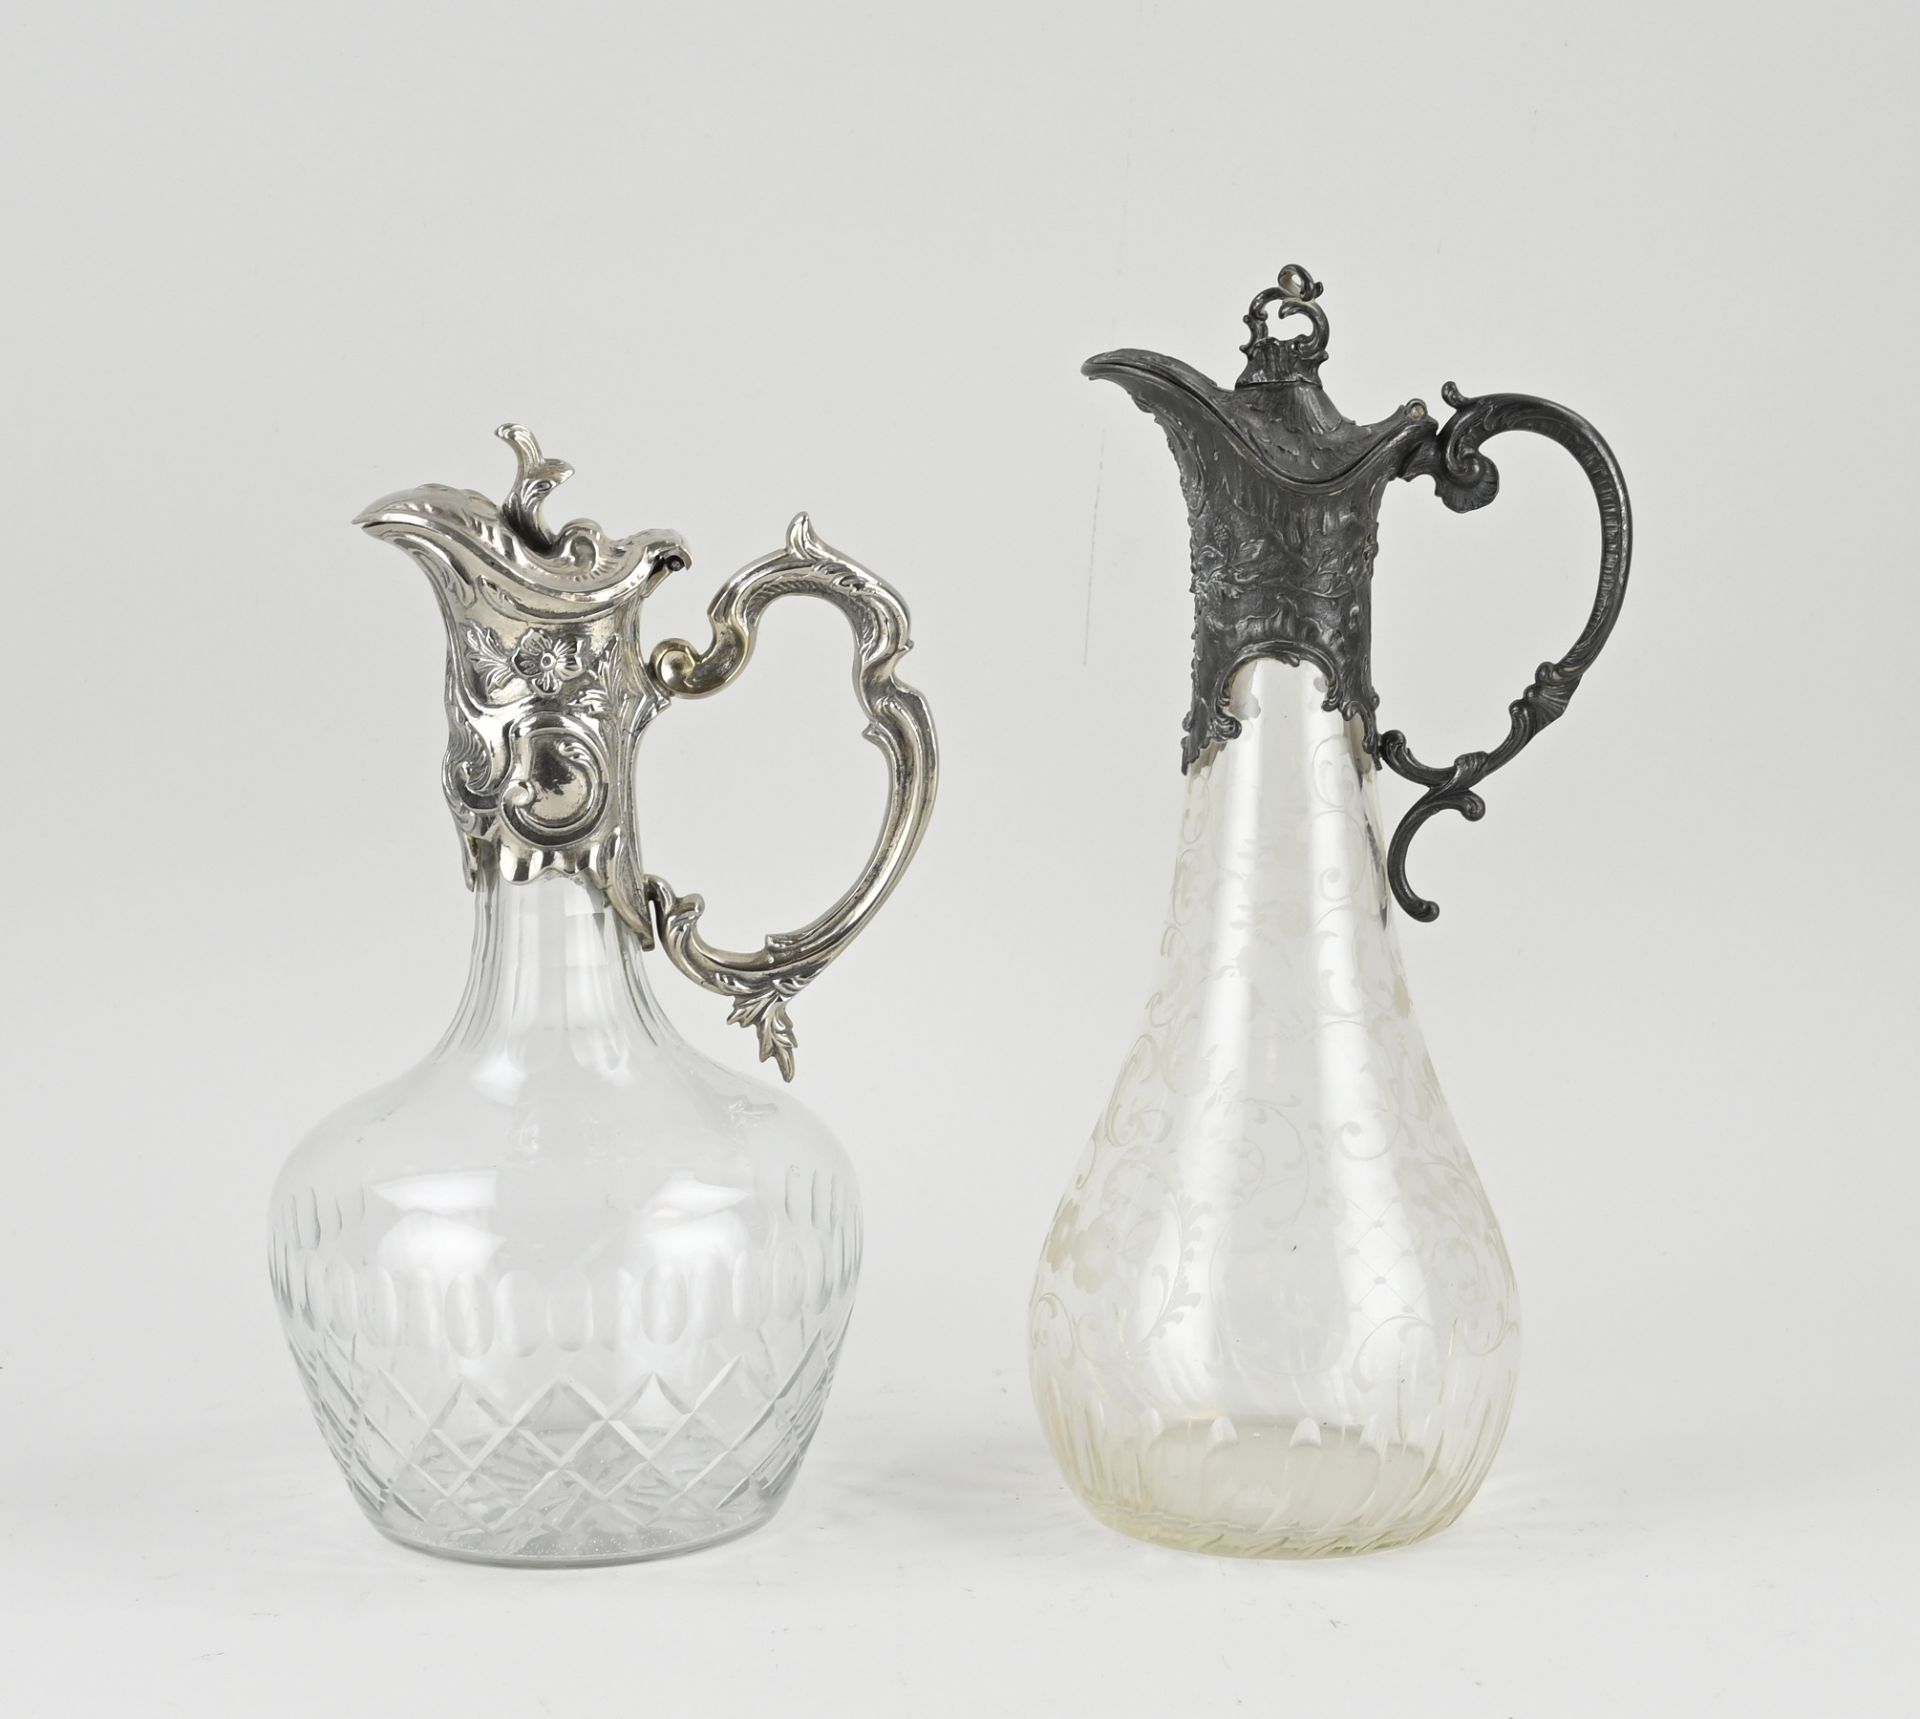 Two antique jugs, 1890